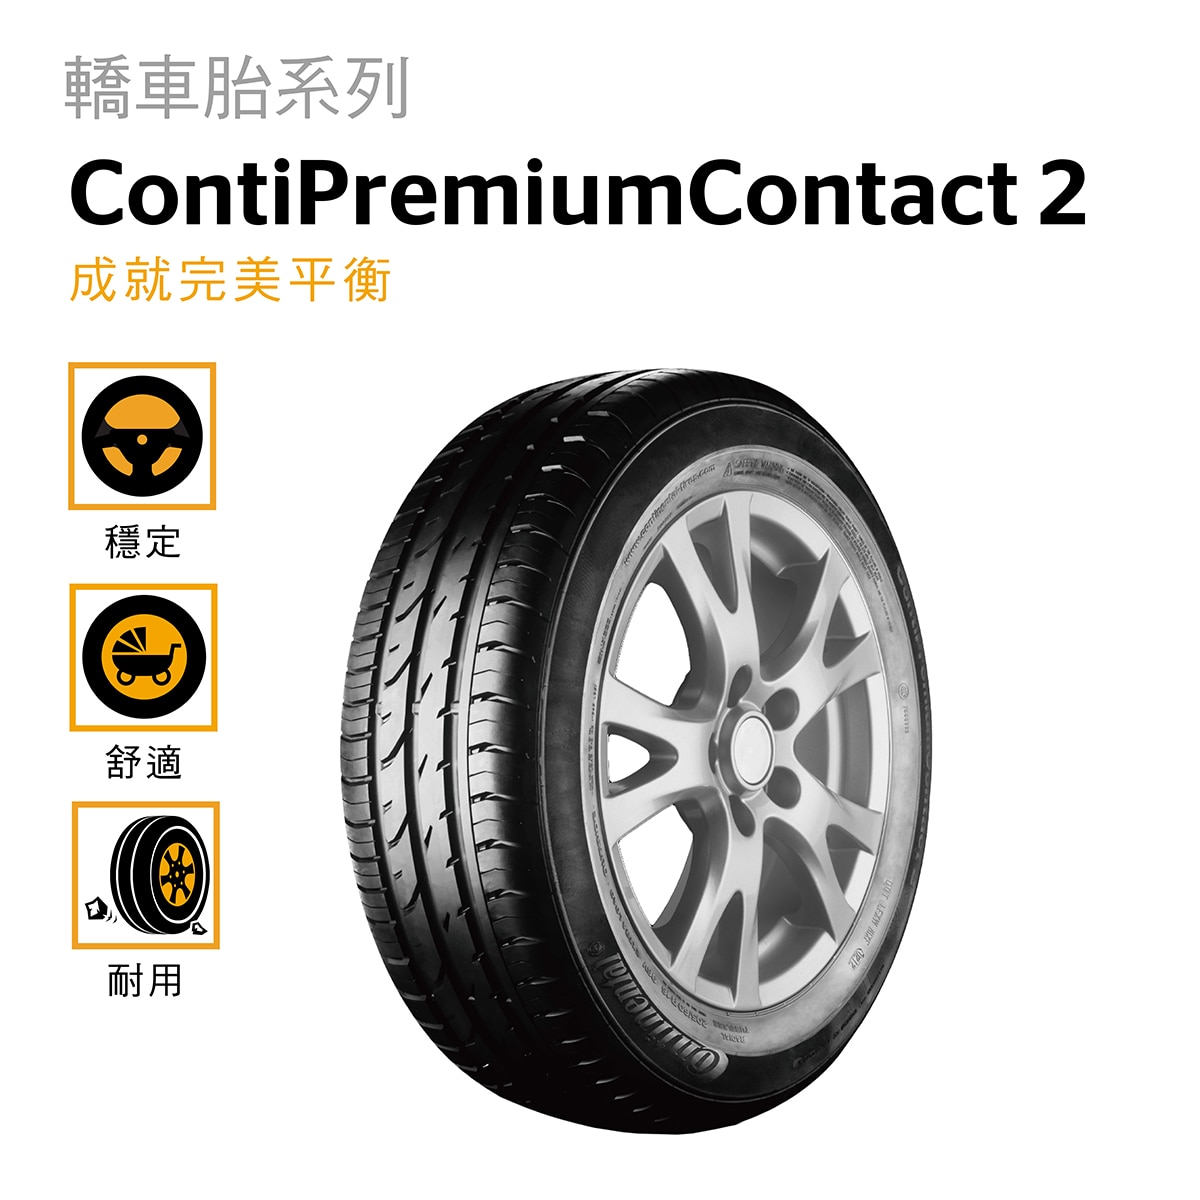 Continental 馬牌輪胎Conti Premium Contact 2 適用於高階中型豪華轎車，大胎塊花紋與3D溝槽設計在有效抑制水滑效應下，同時提供了傑出的煞車性能與駕駛穩定性。